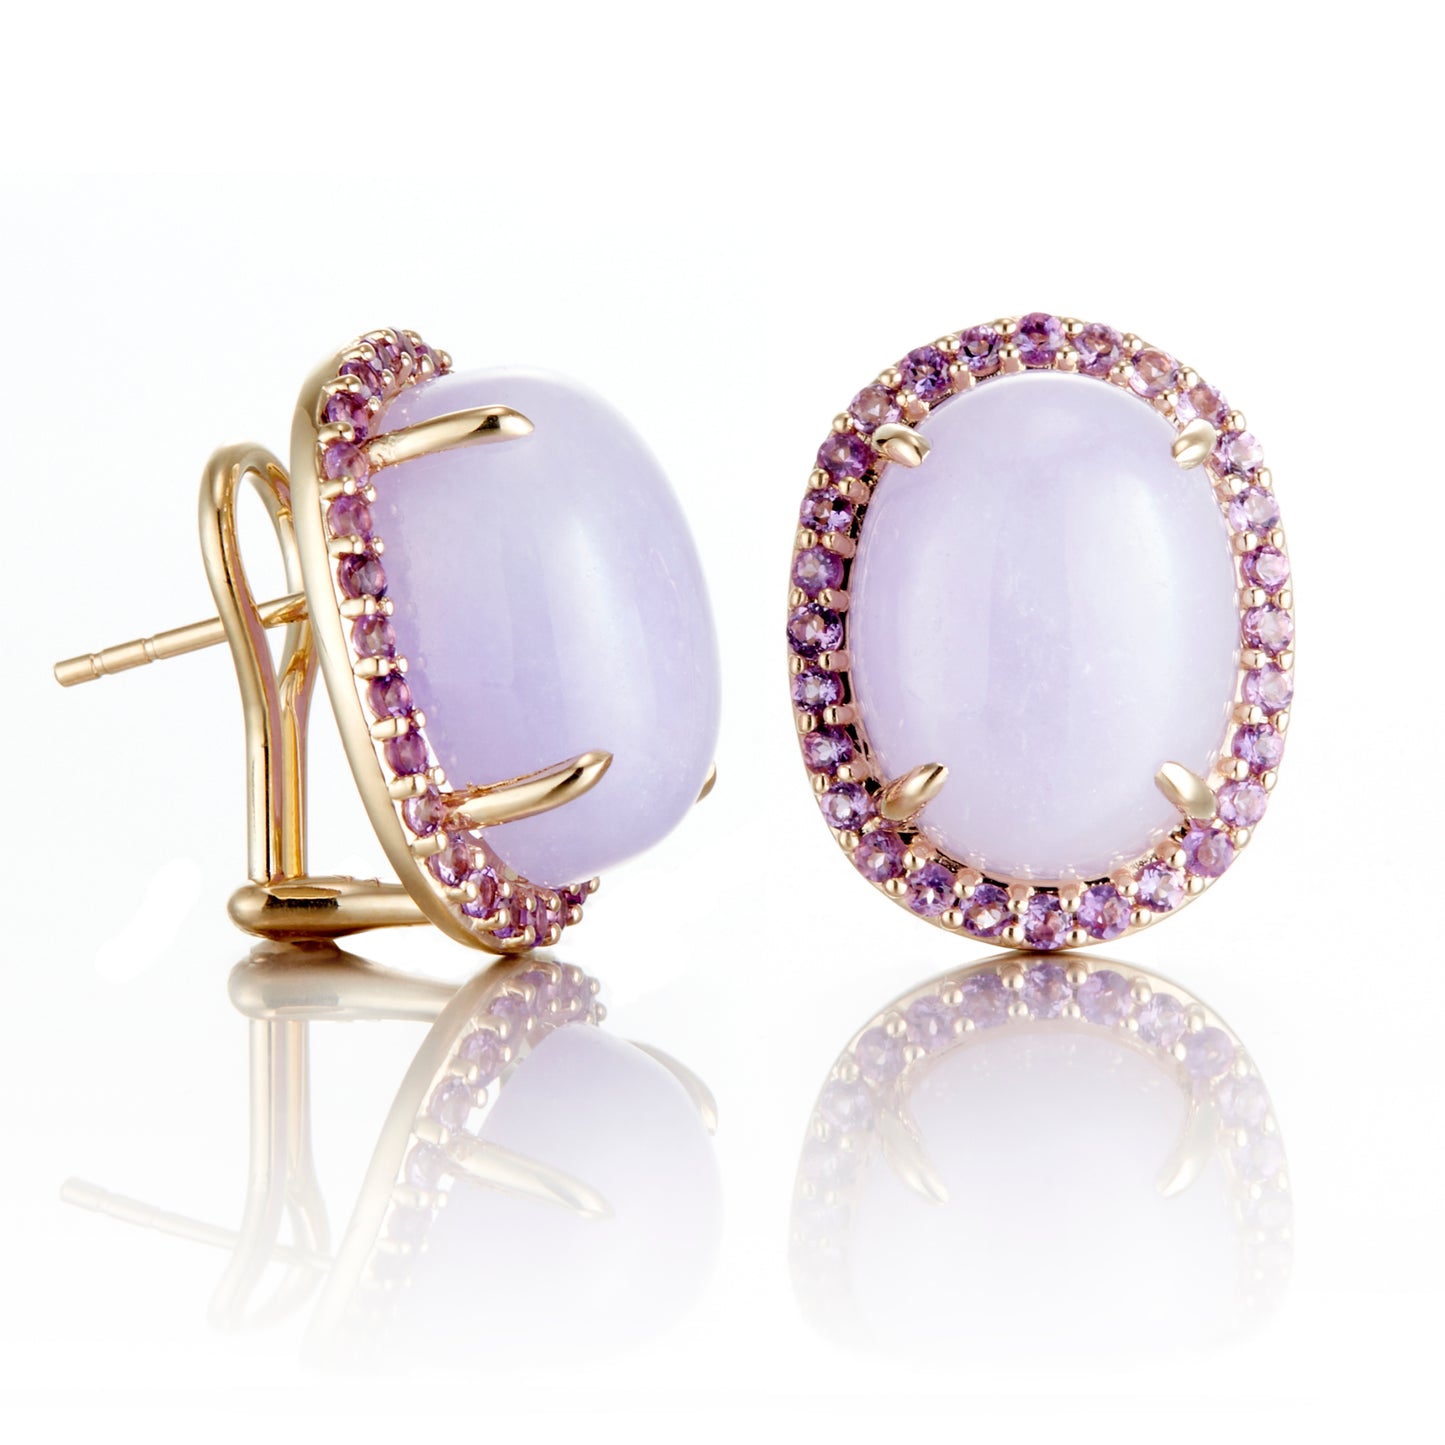 Greenwich Earrings in Lavender Jade & Amethyst